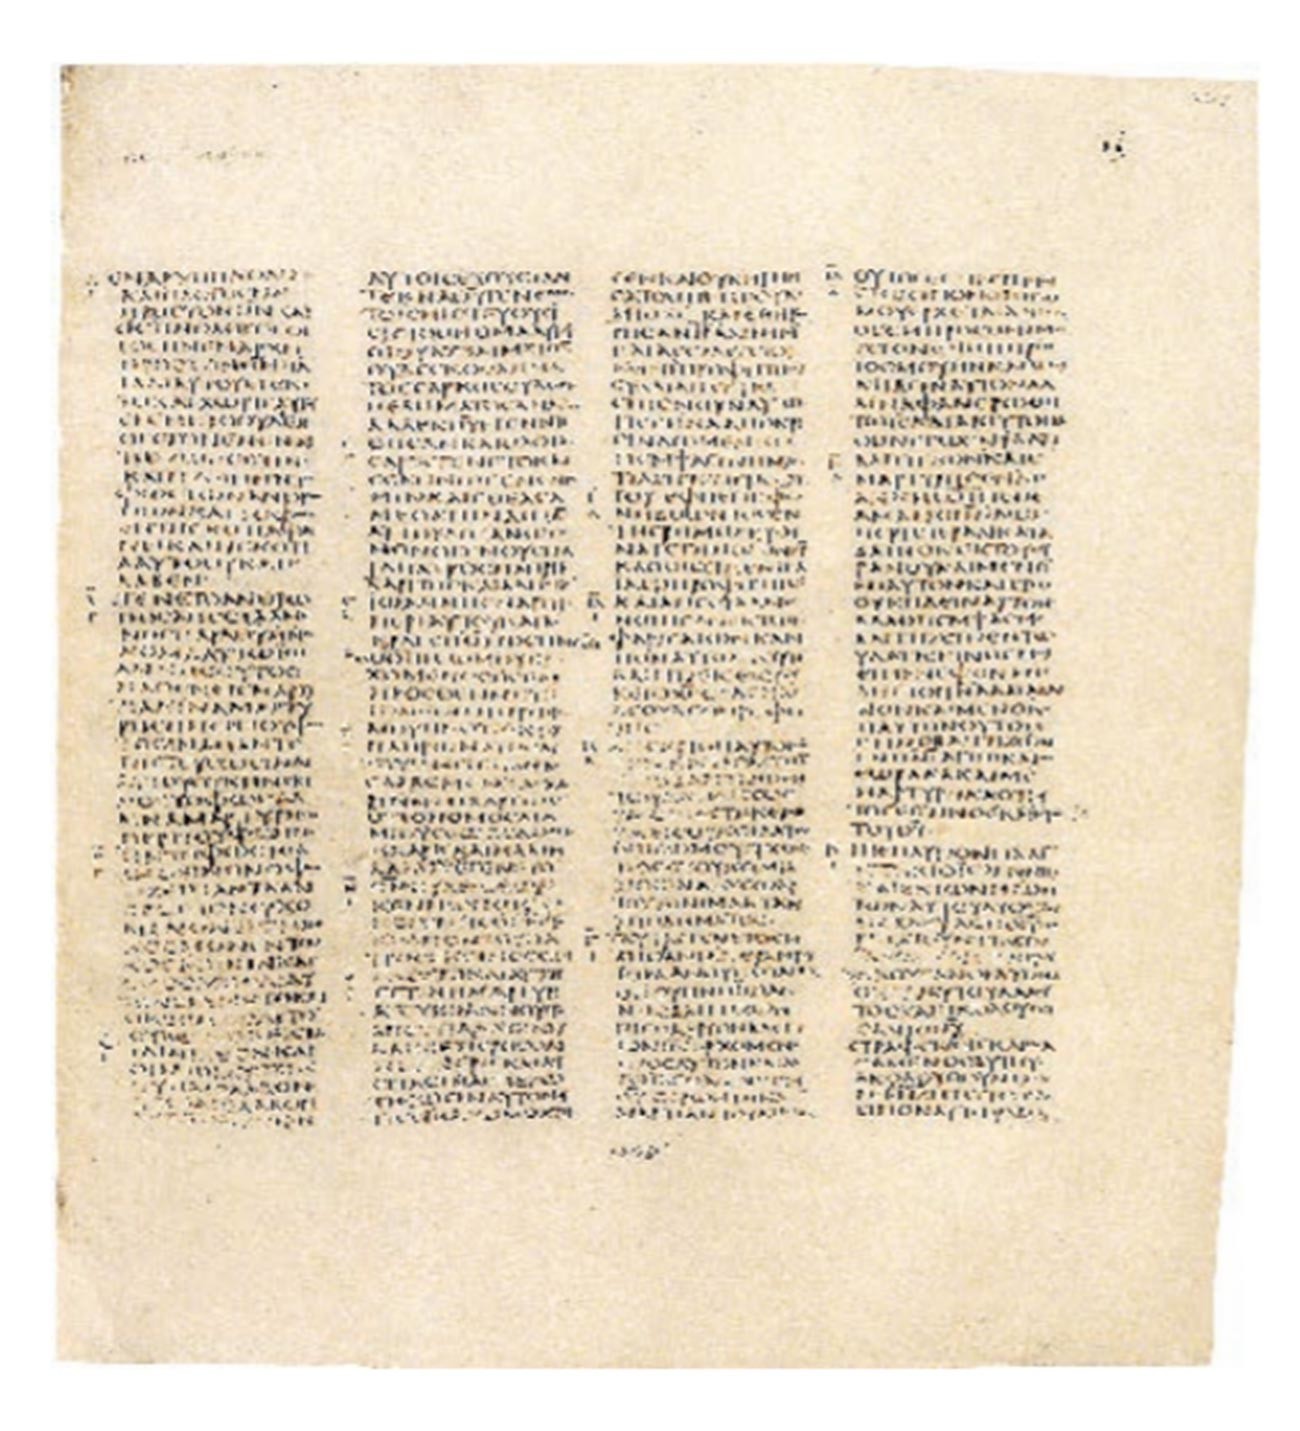 Sebuah halaman dari Codex Sinaiticus